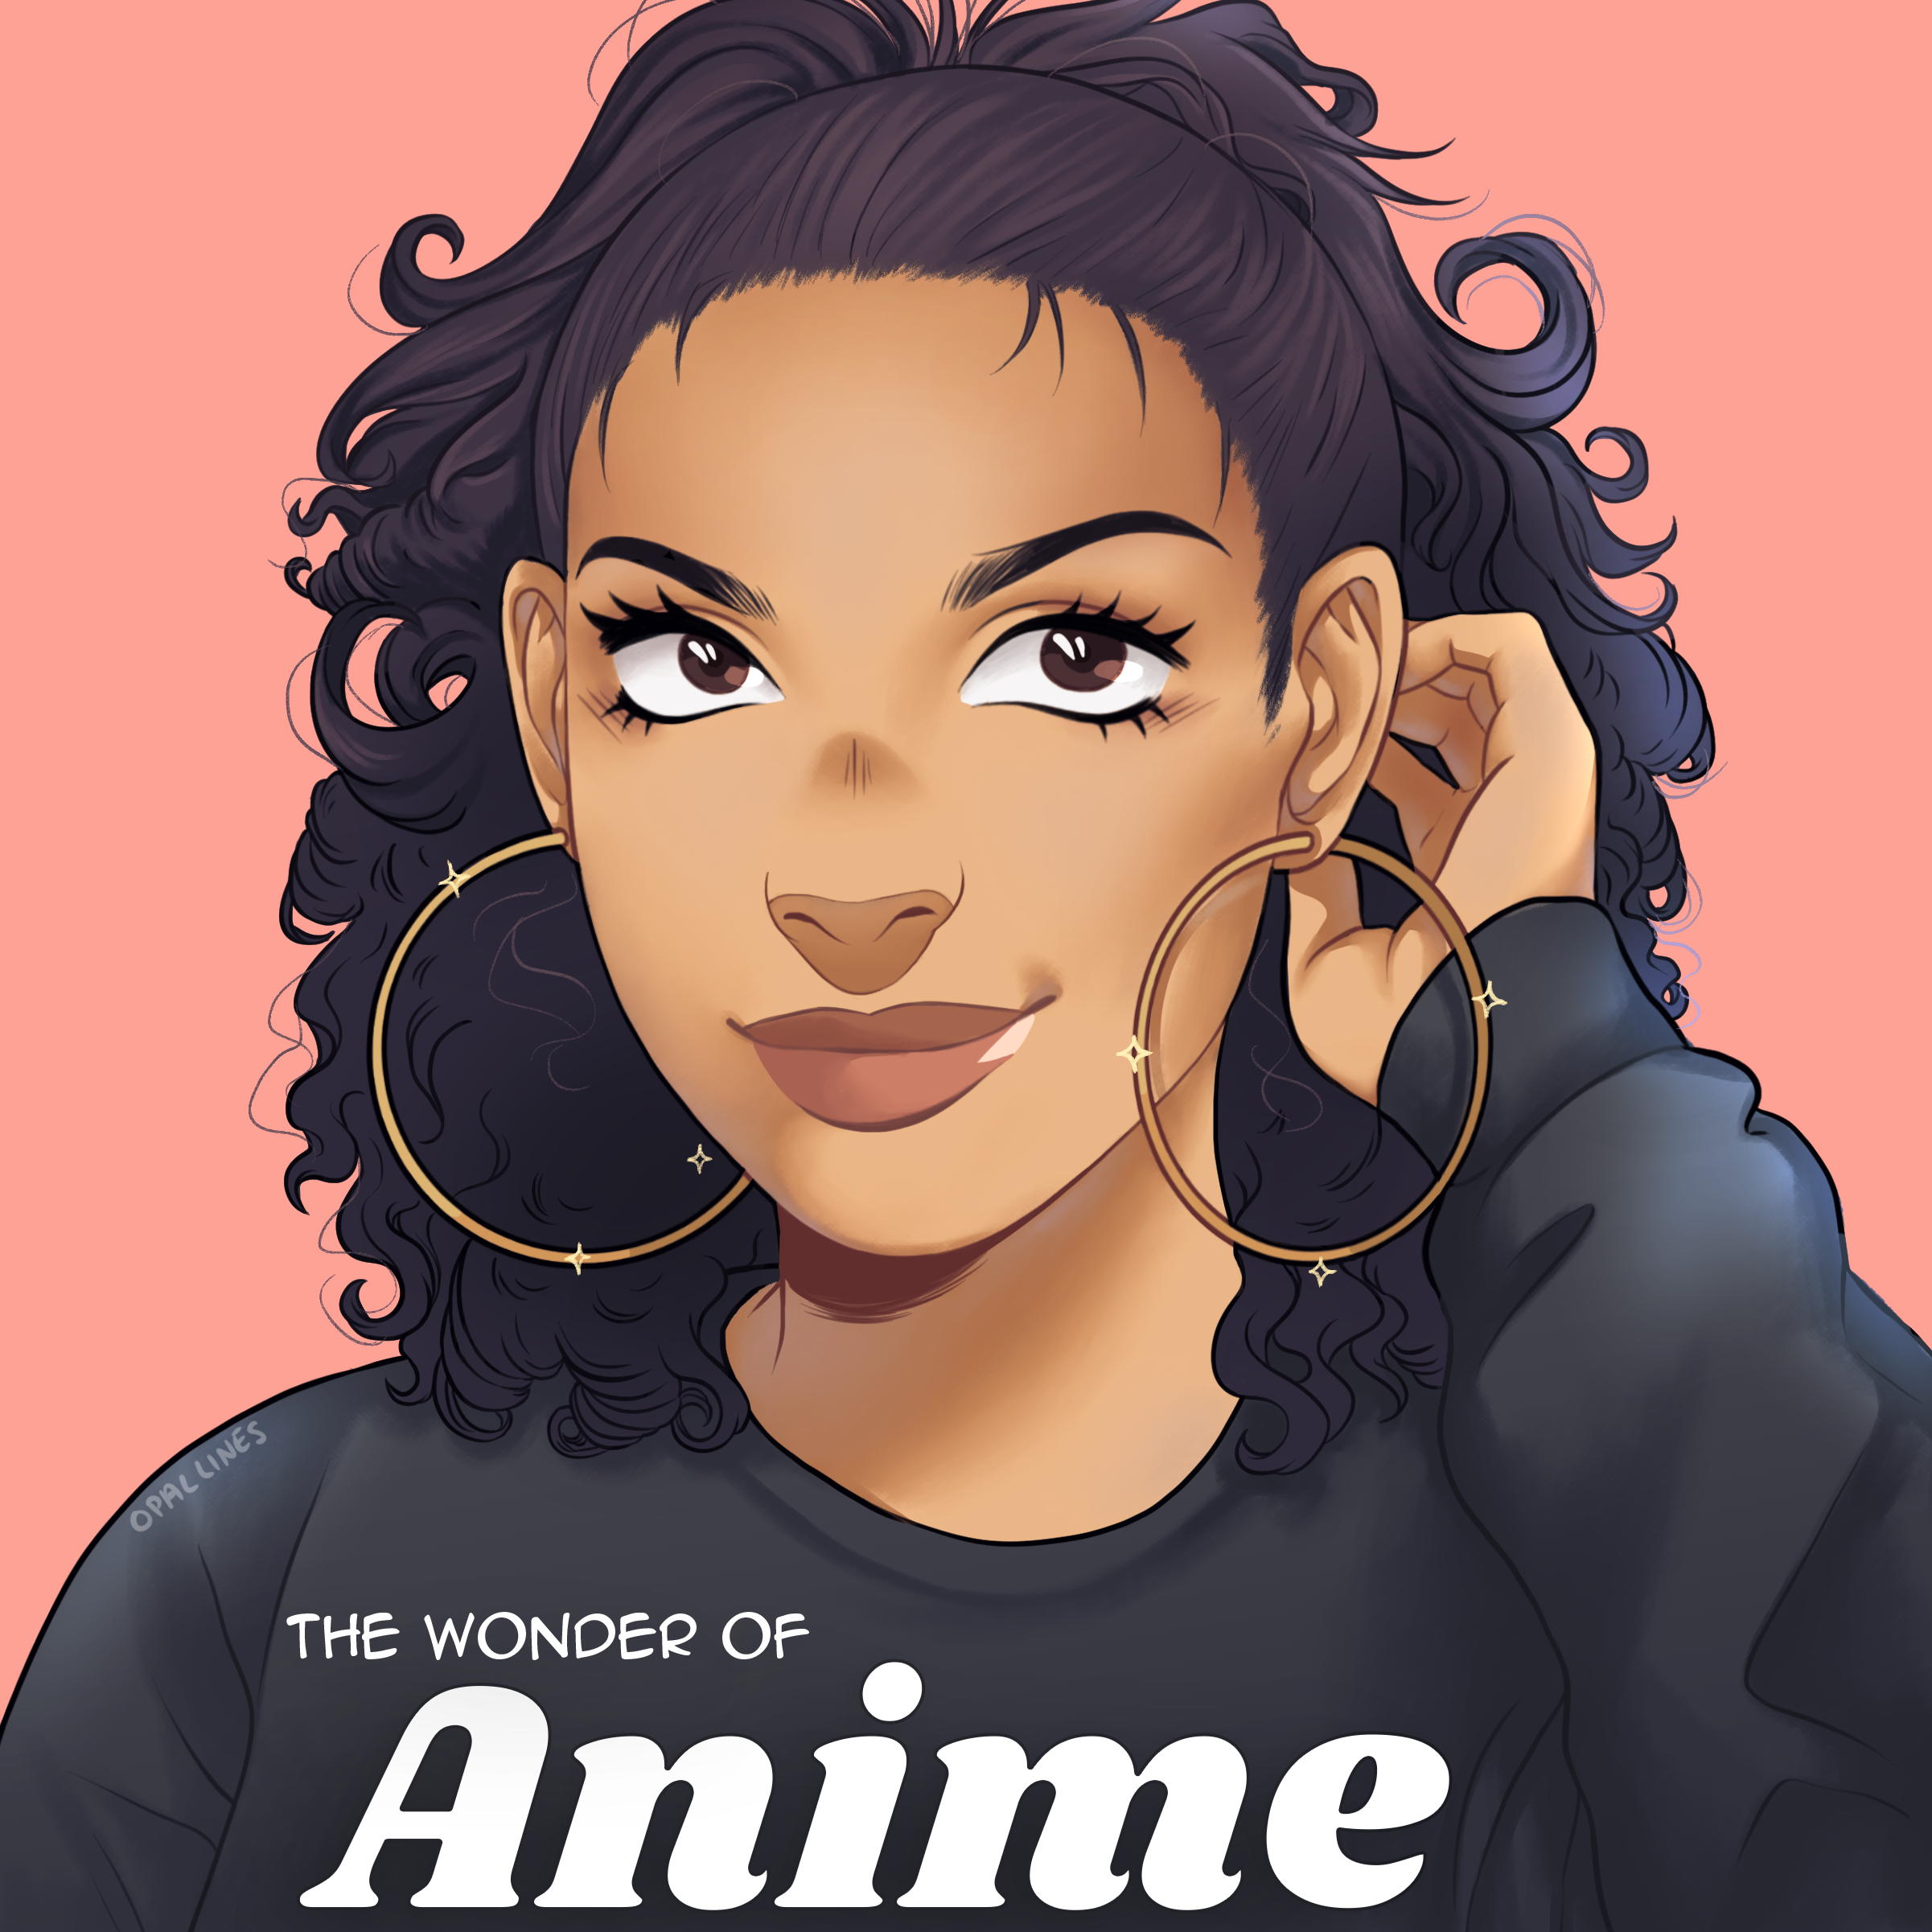 Anime Summit Podcast 